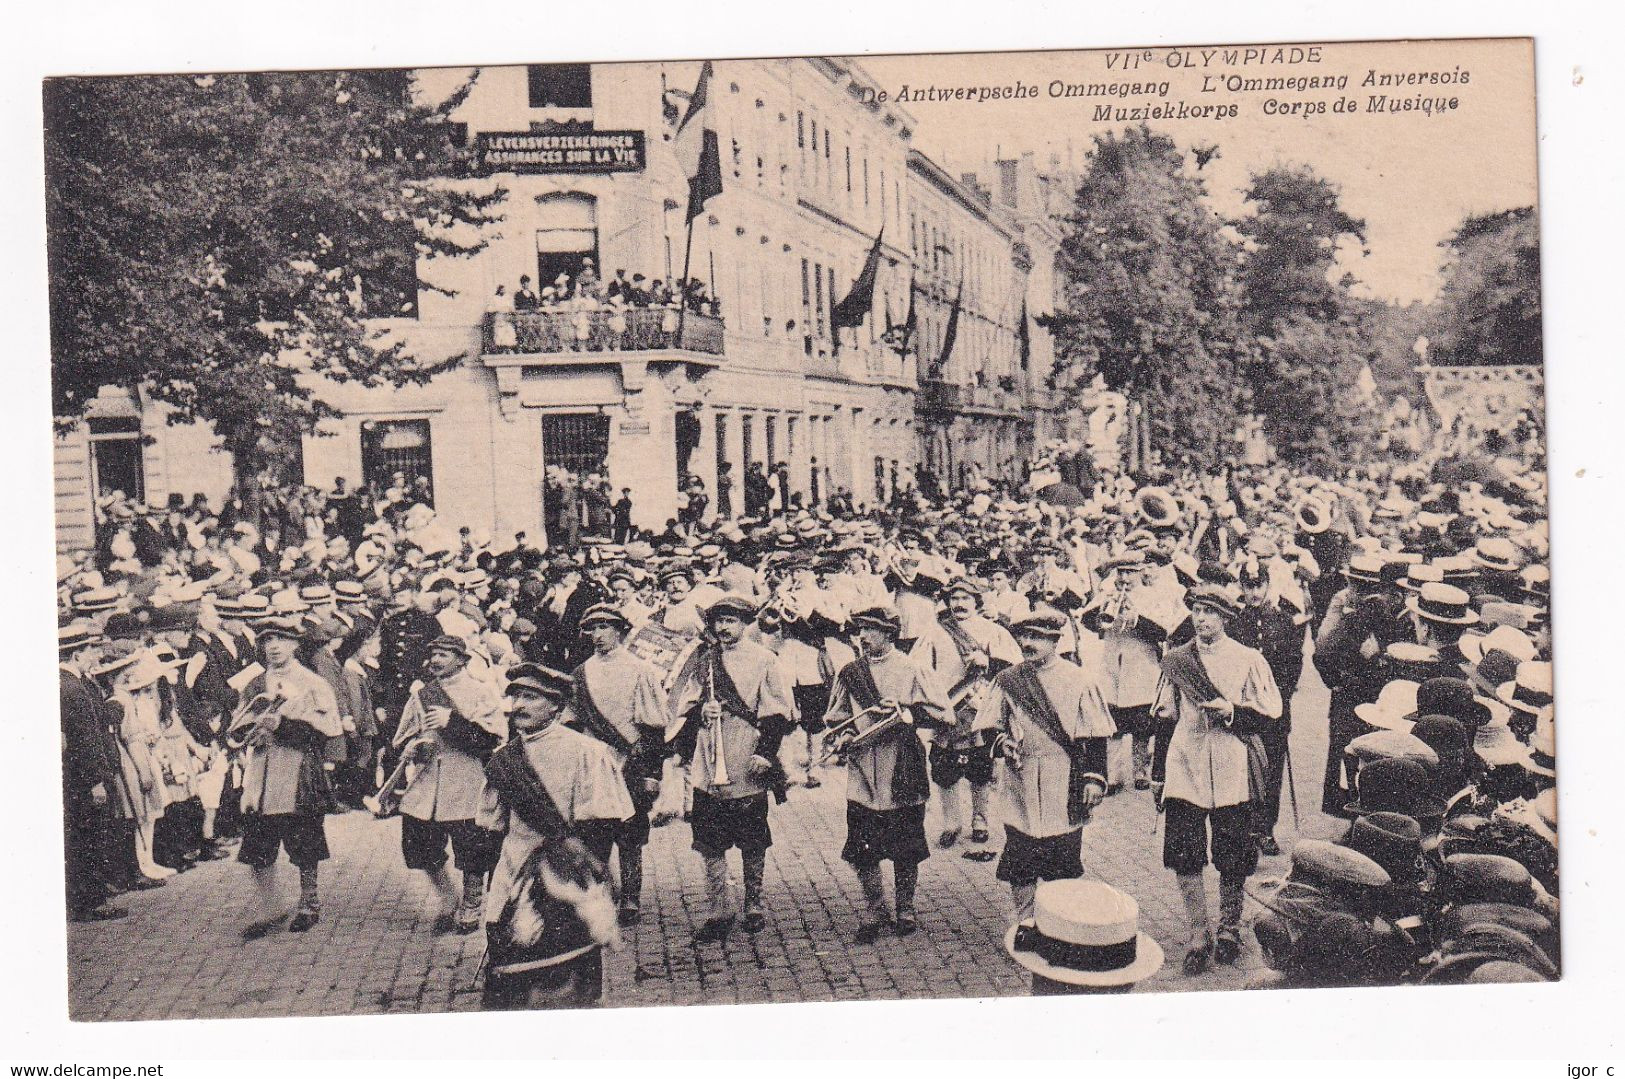 Belgium 1920 Card: Olympic Games Anvers Antwerp; Folklore Festival - Zomer 1920: Antwerpen